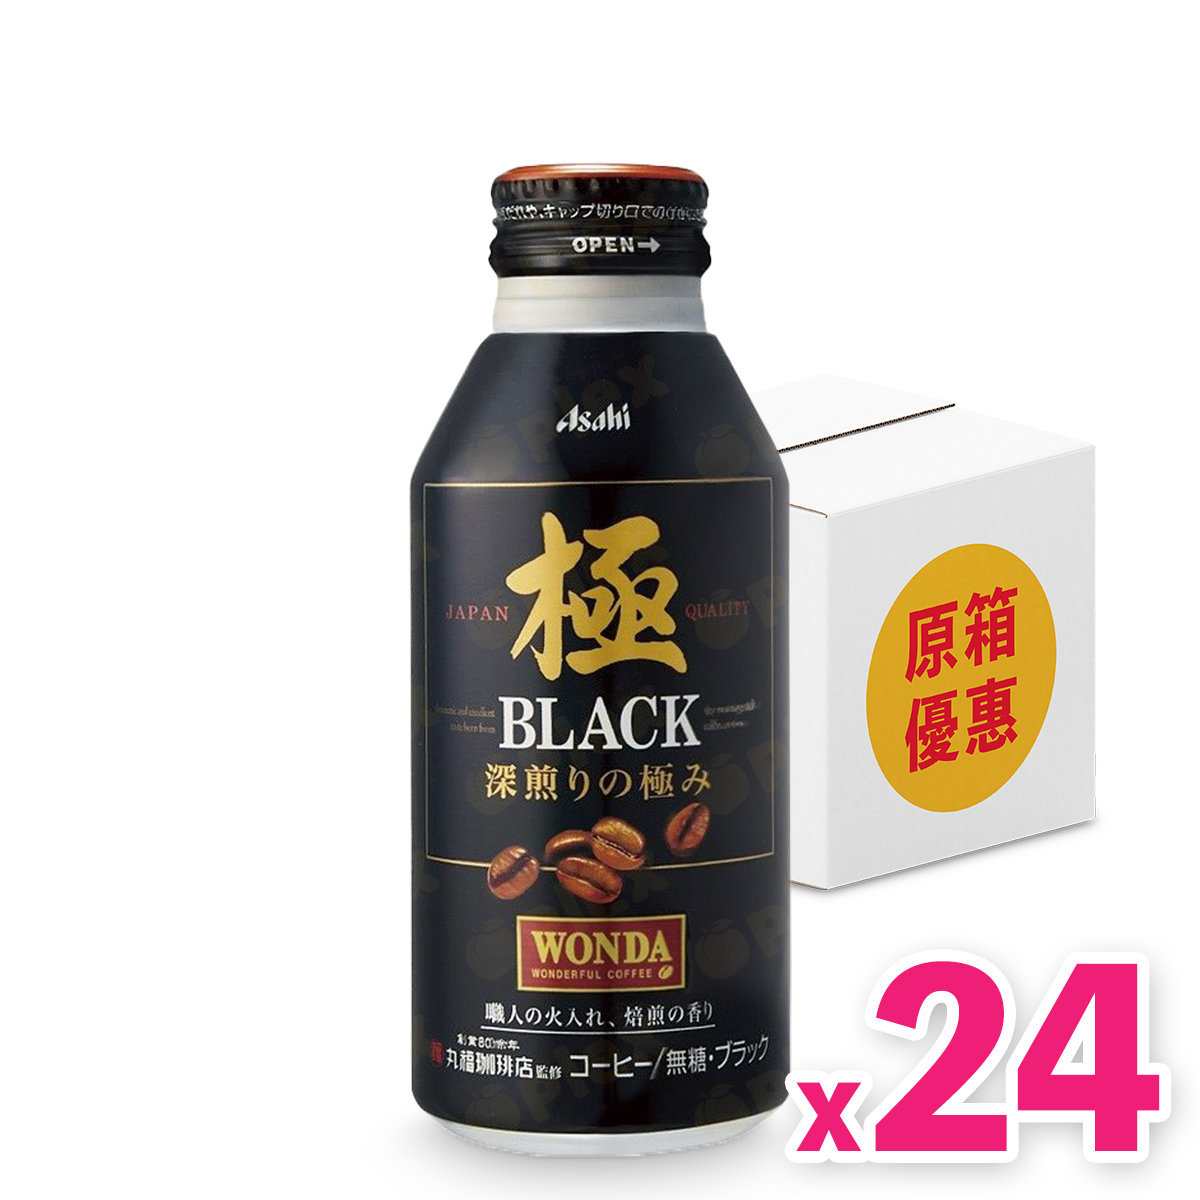 Black Coffee Japan / Boss Coffee By Suntory Japanese Flash